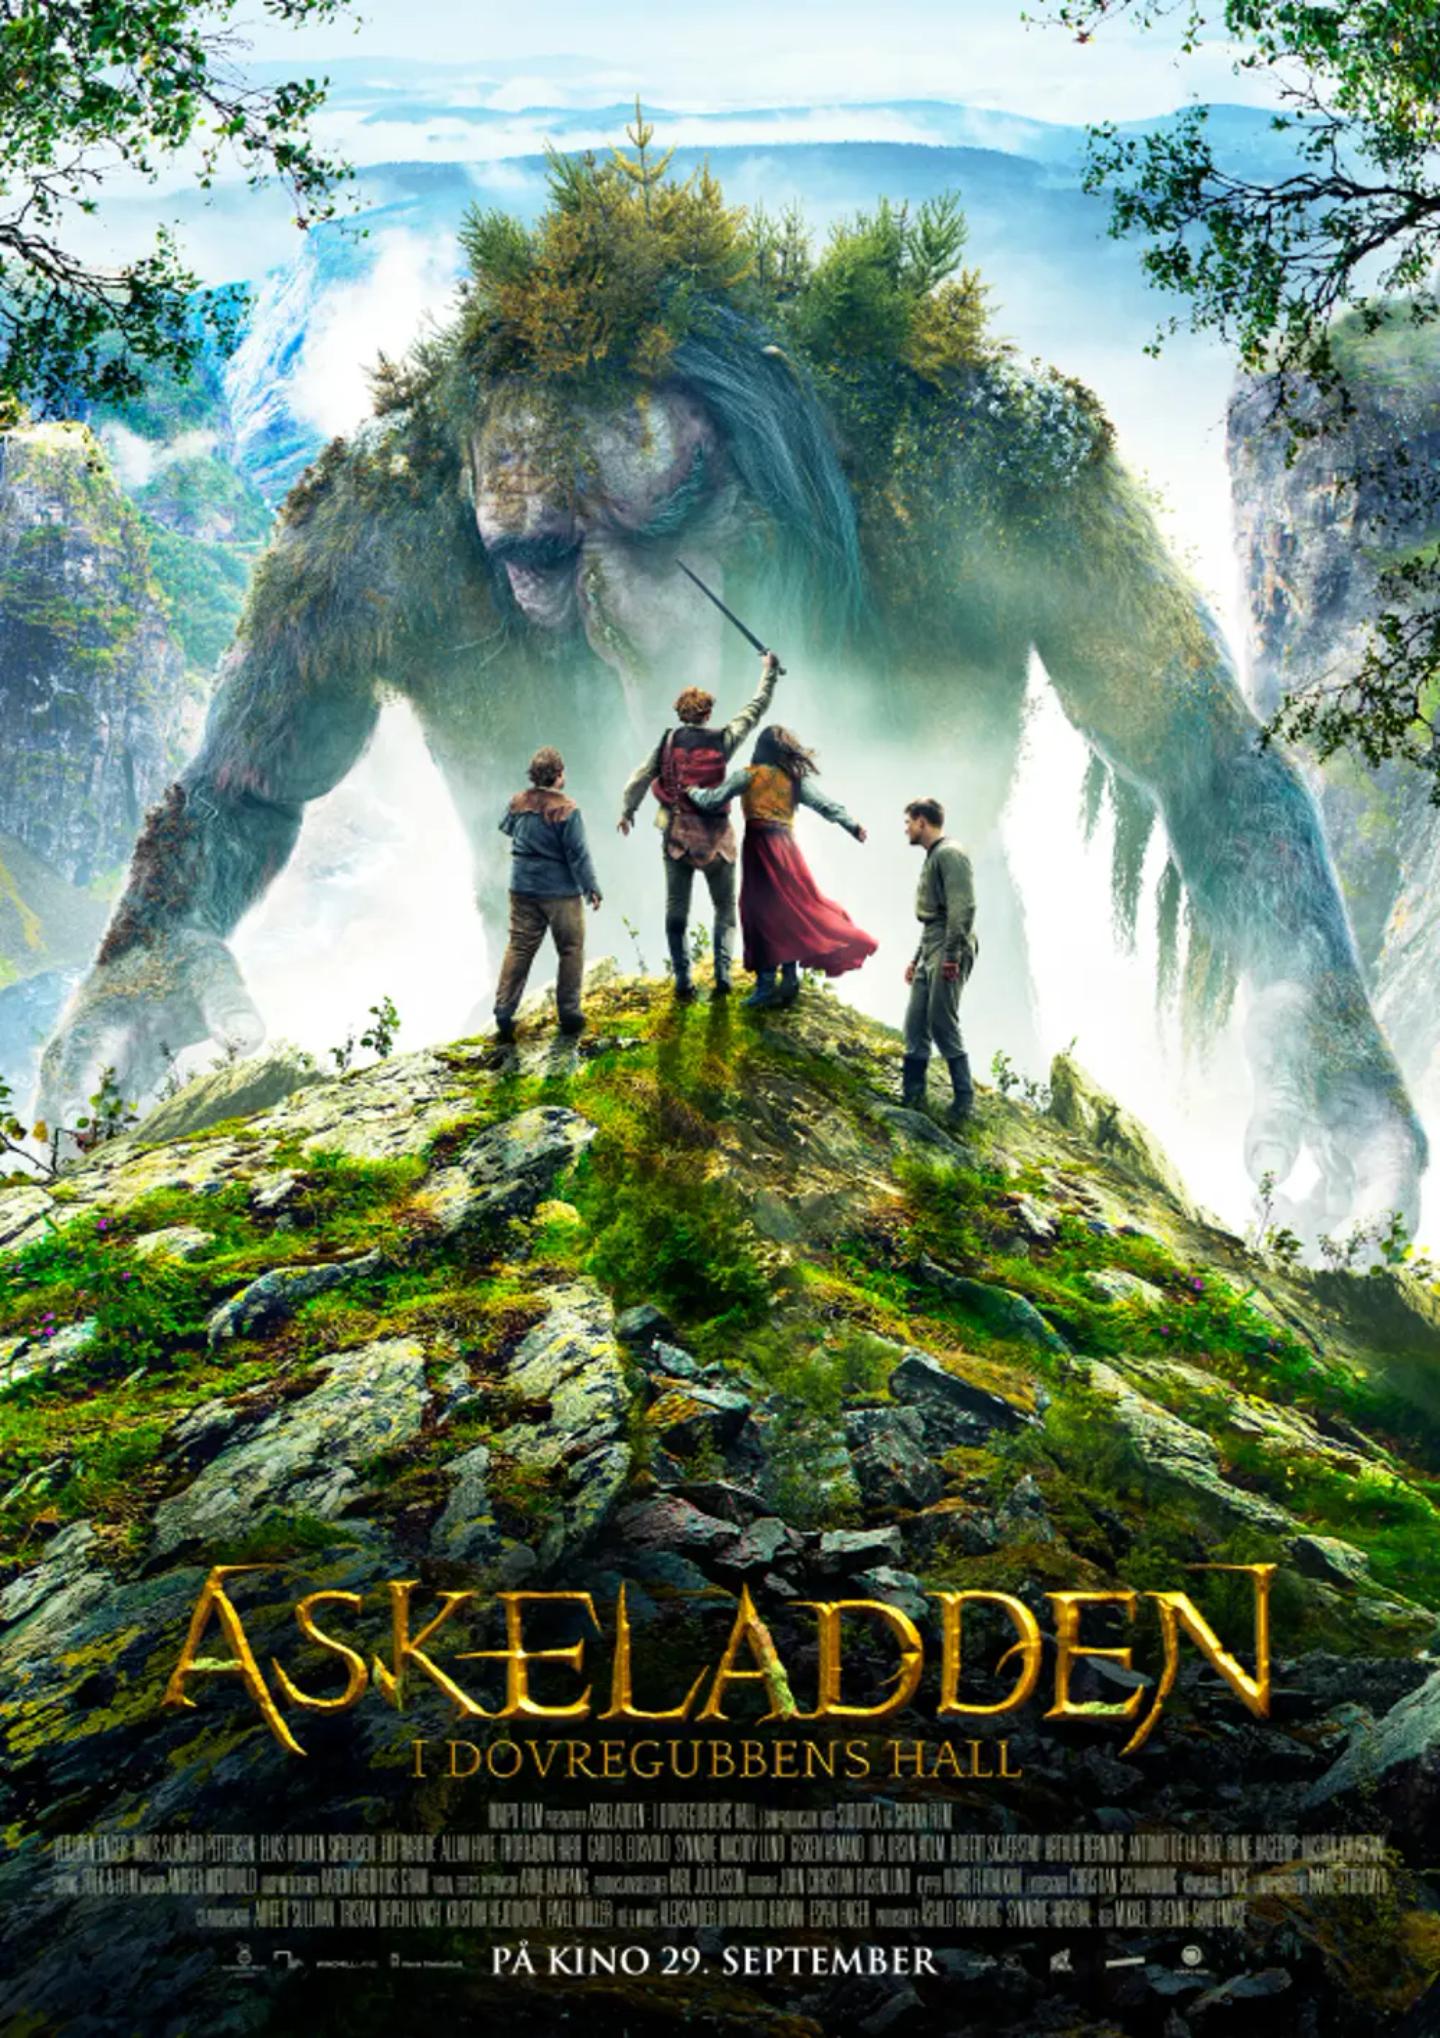 Plakat for 'Askeladden - I Dovregubbens hall'